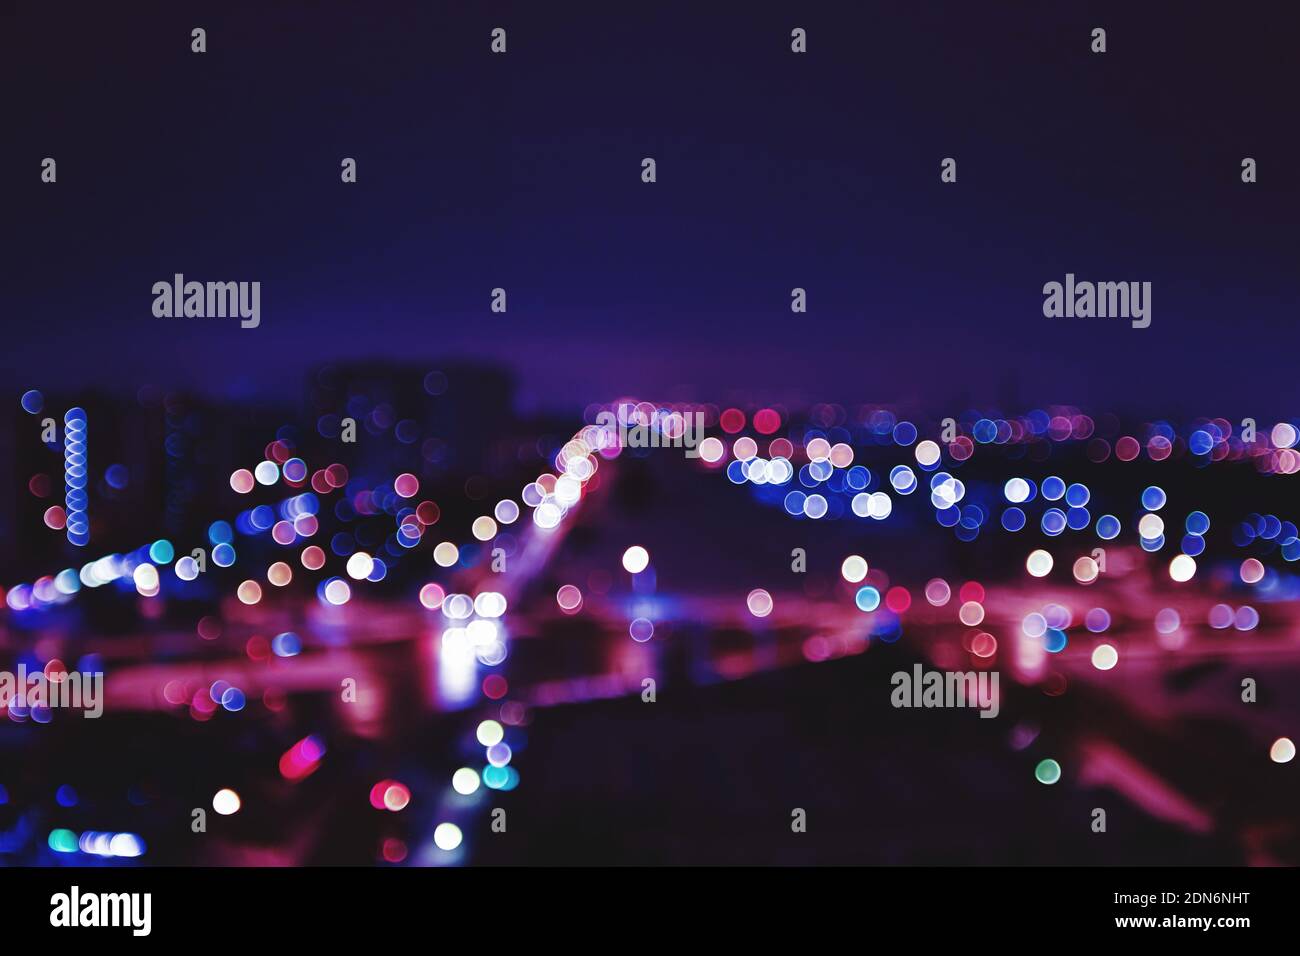 Defocused Image Of Illuminated City Against Sky At Night Stock Photo